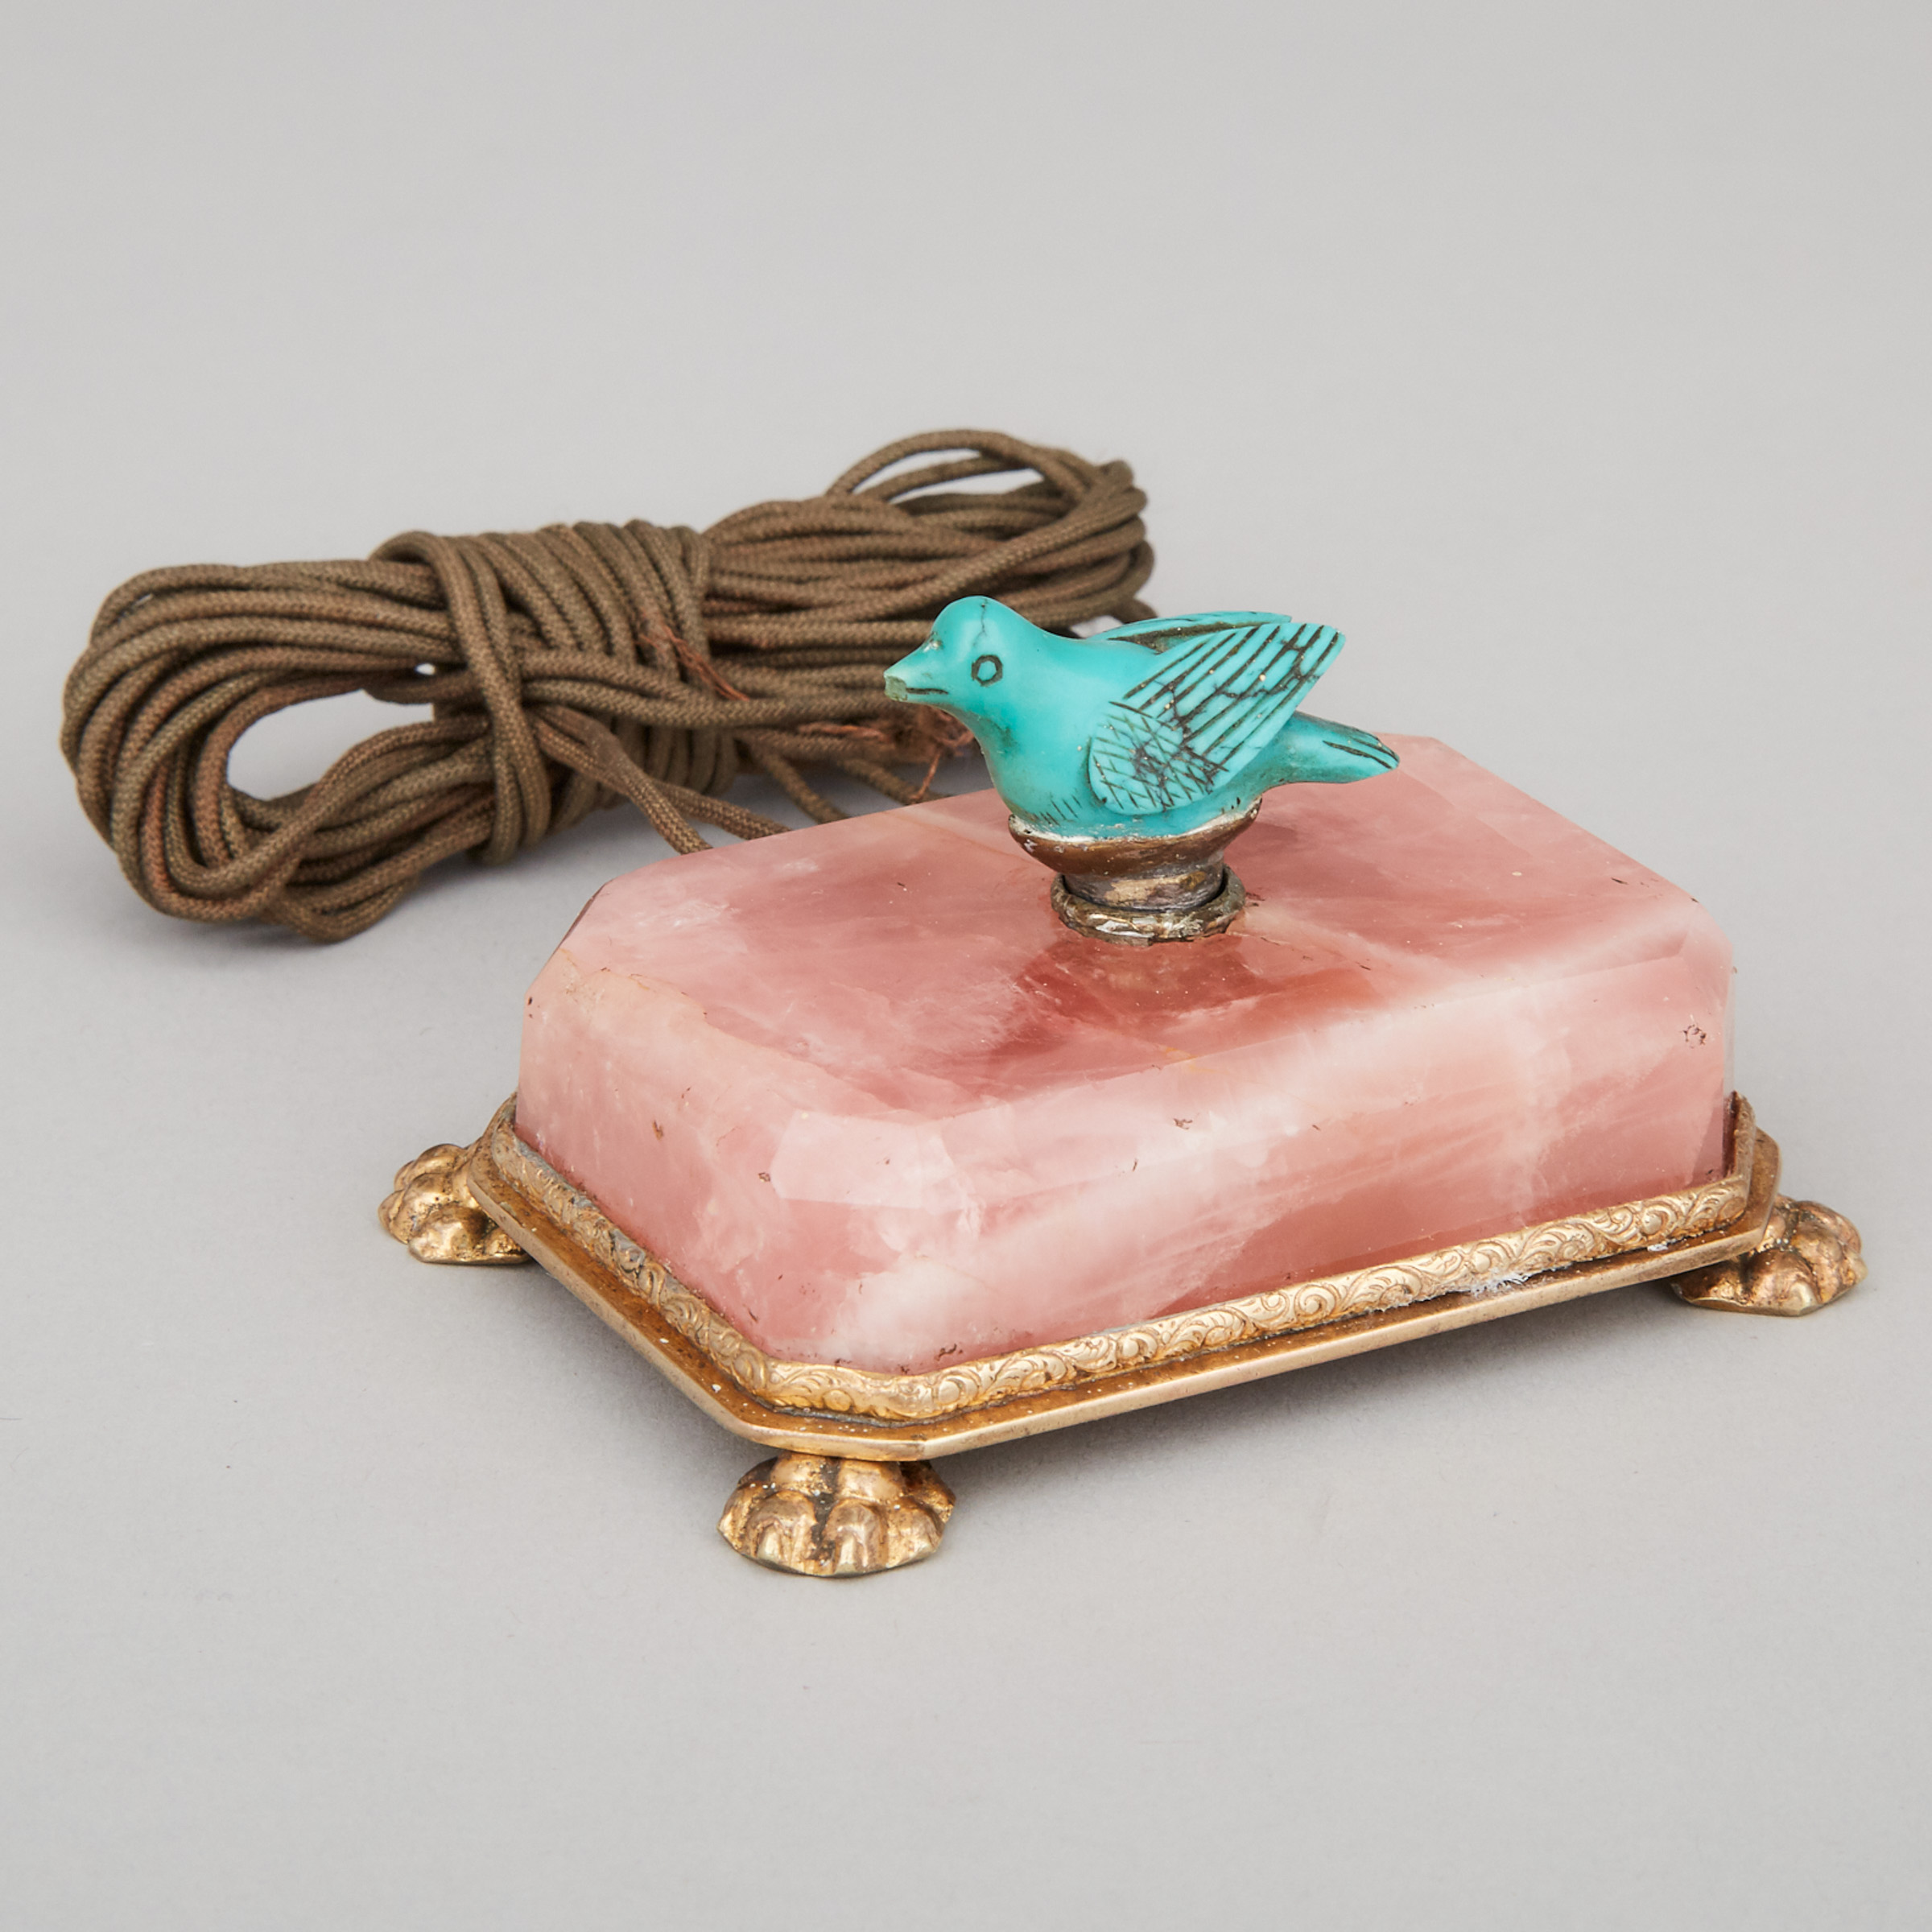 Rose Quartz and Turquoise Bird Form Servant Call Button, Nicholas Haydon, New York, 19th/early 20th century 